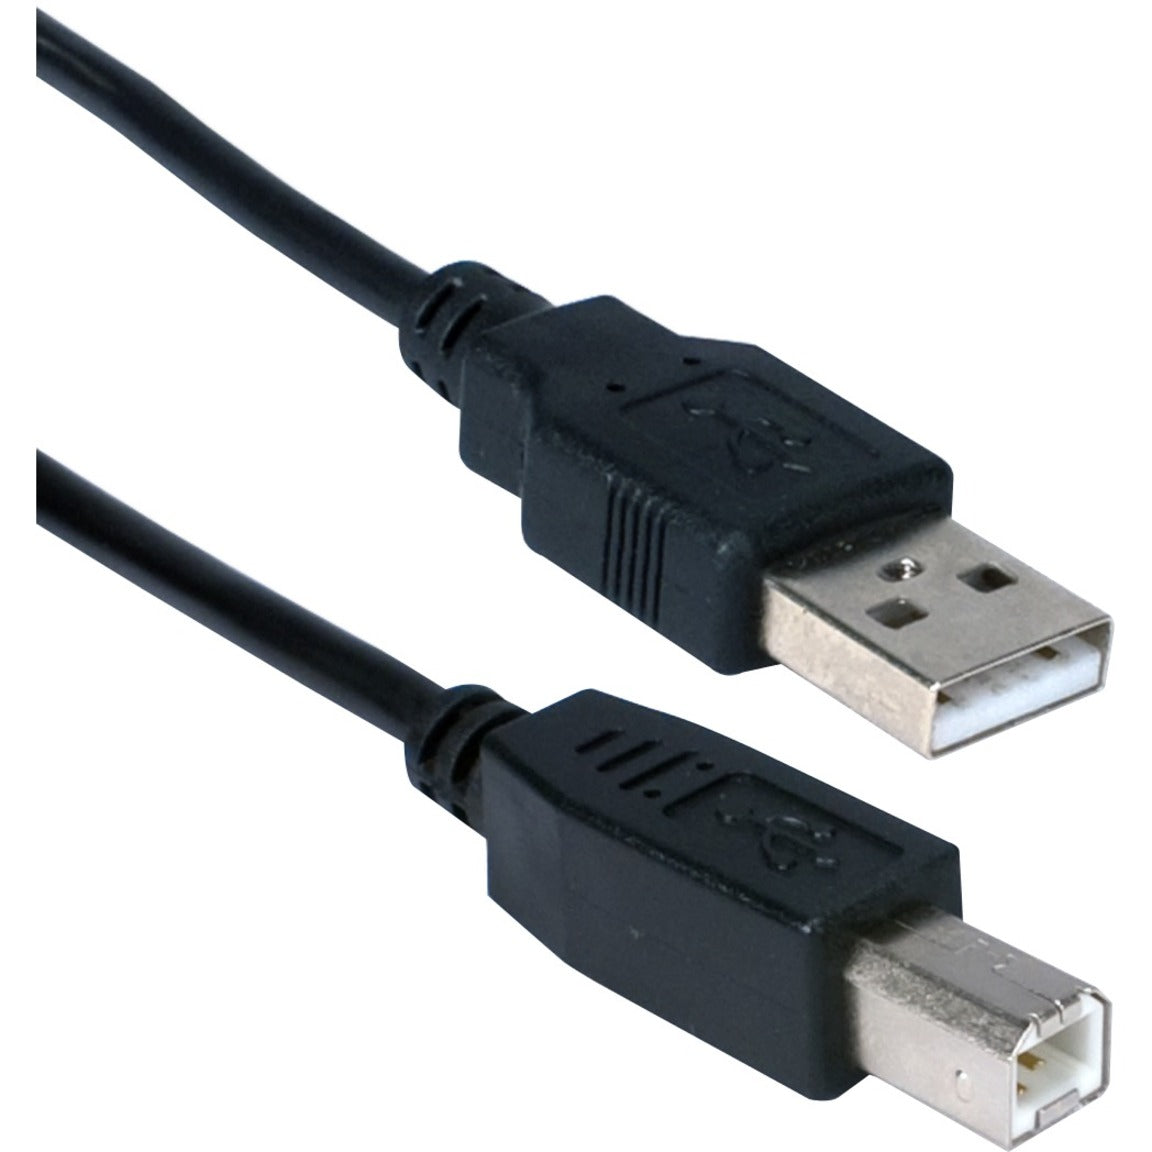 QVS CC2209C-06 USB Cable, 6 ft, Data Transfer Cable